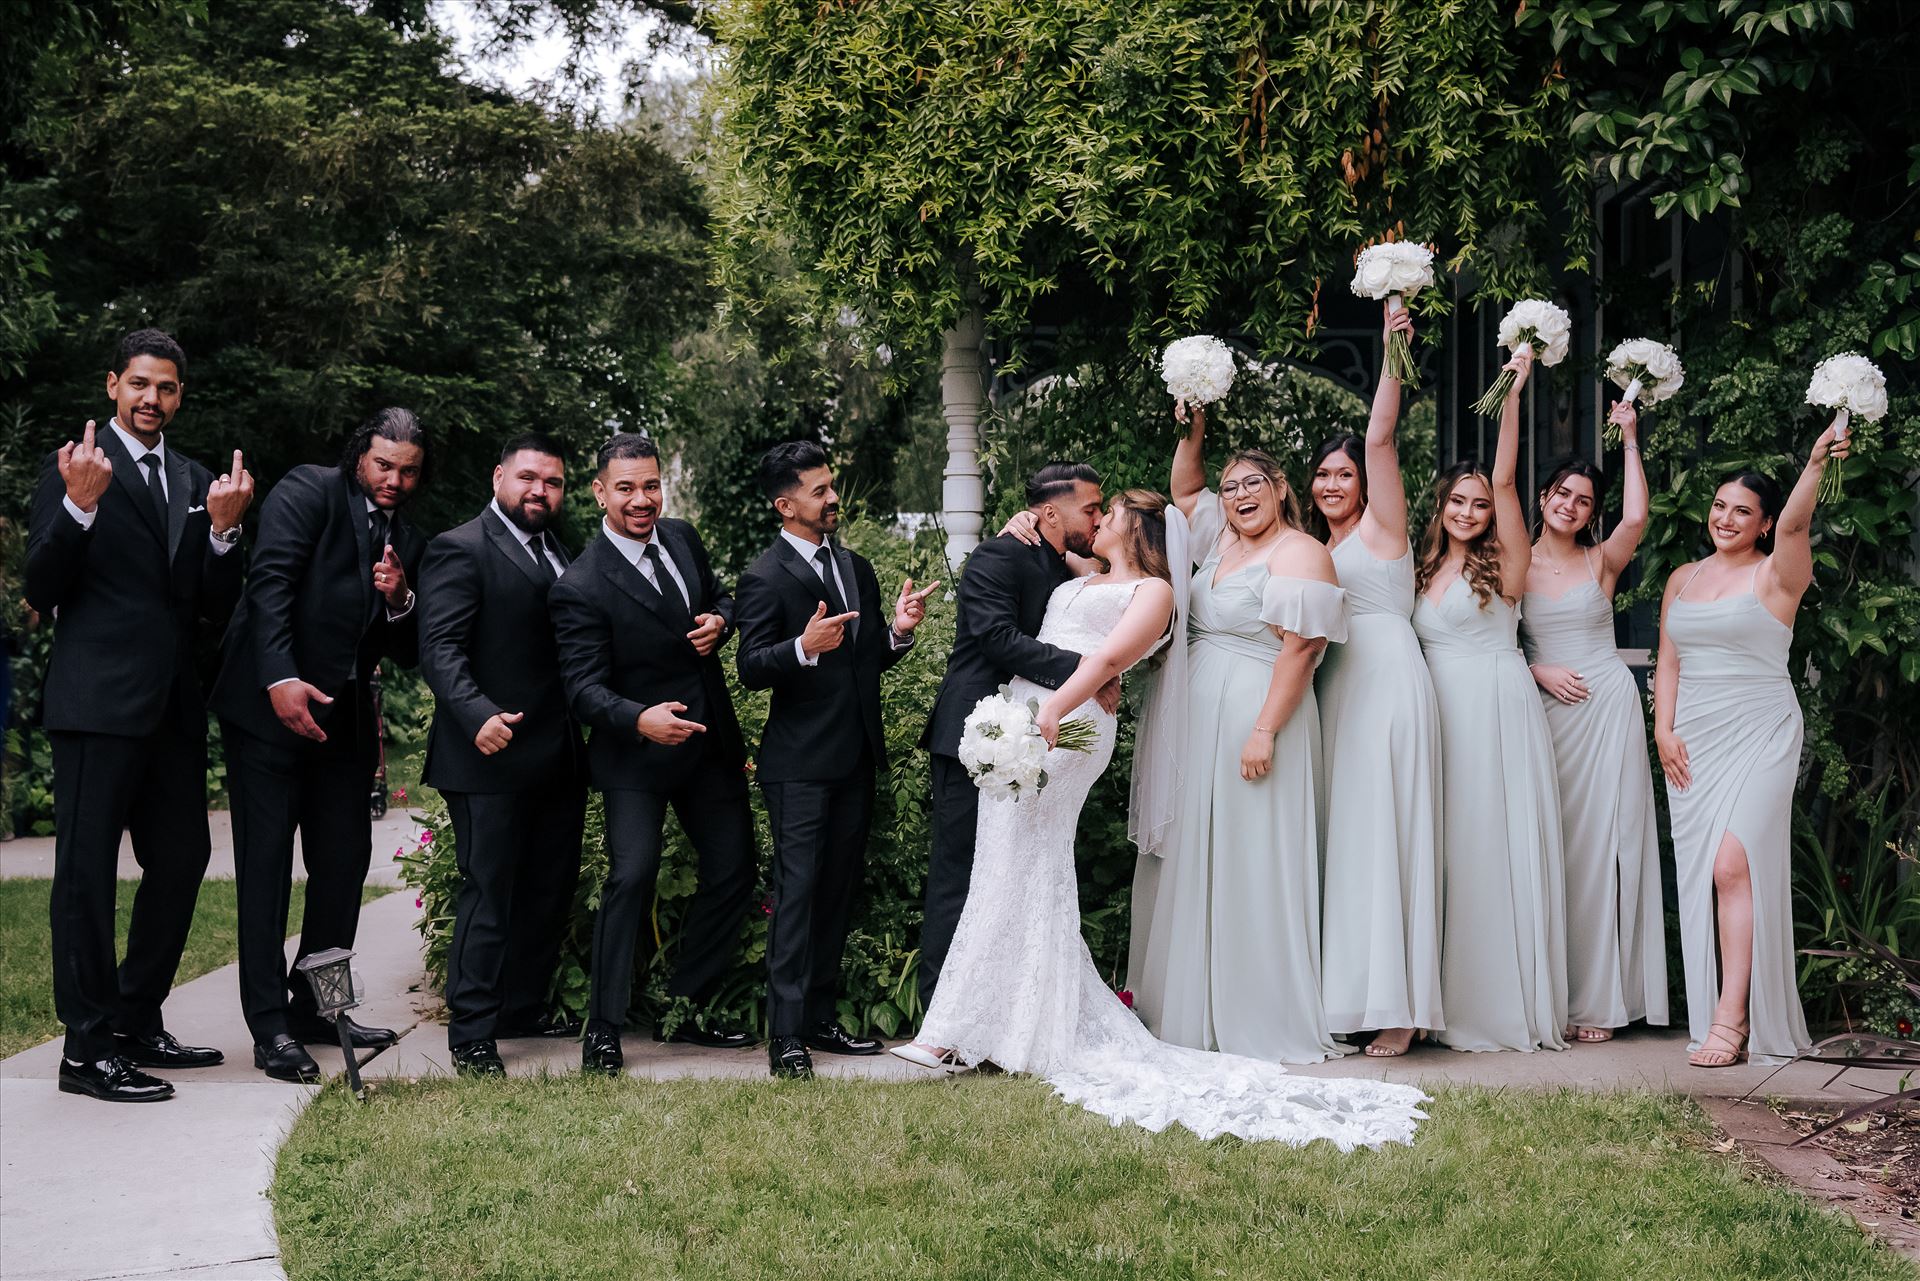 Final-2098.JPG - Mirror's Edge Photography San Luis Obispo and Santa Barbara County Wedding Photographer. Kaleidoscope Inn and Gardens Wedding. Bridal Party Fun by Sarah Williams